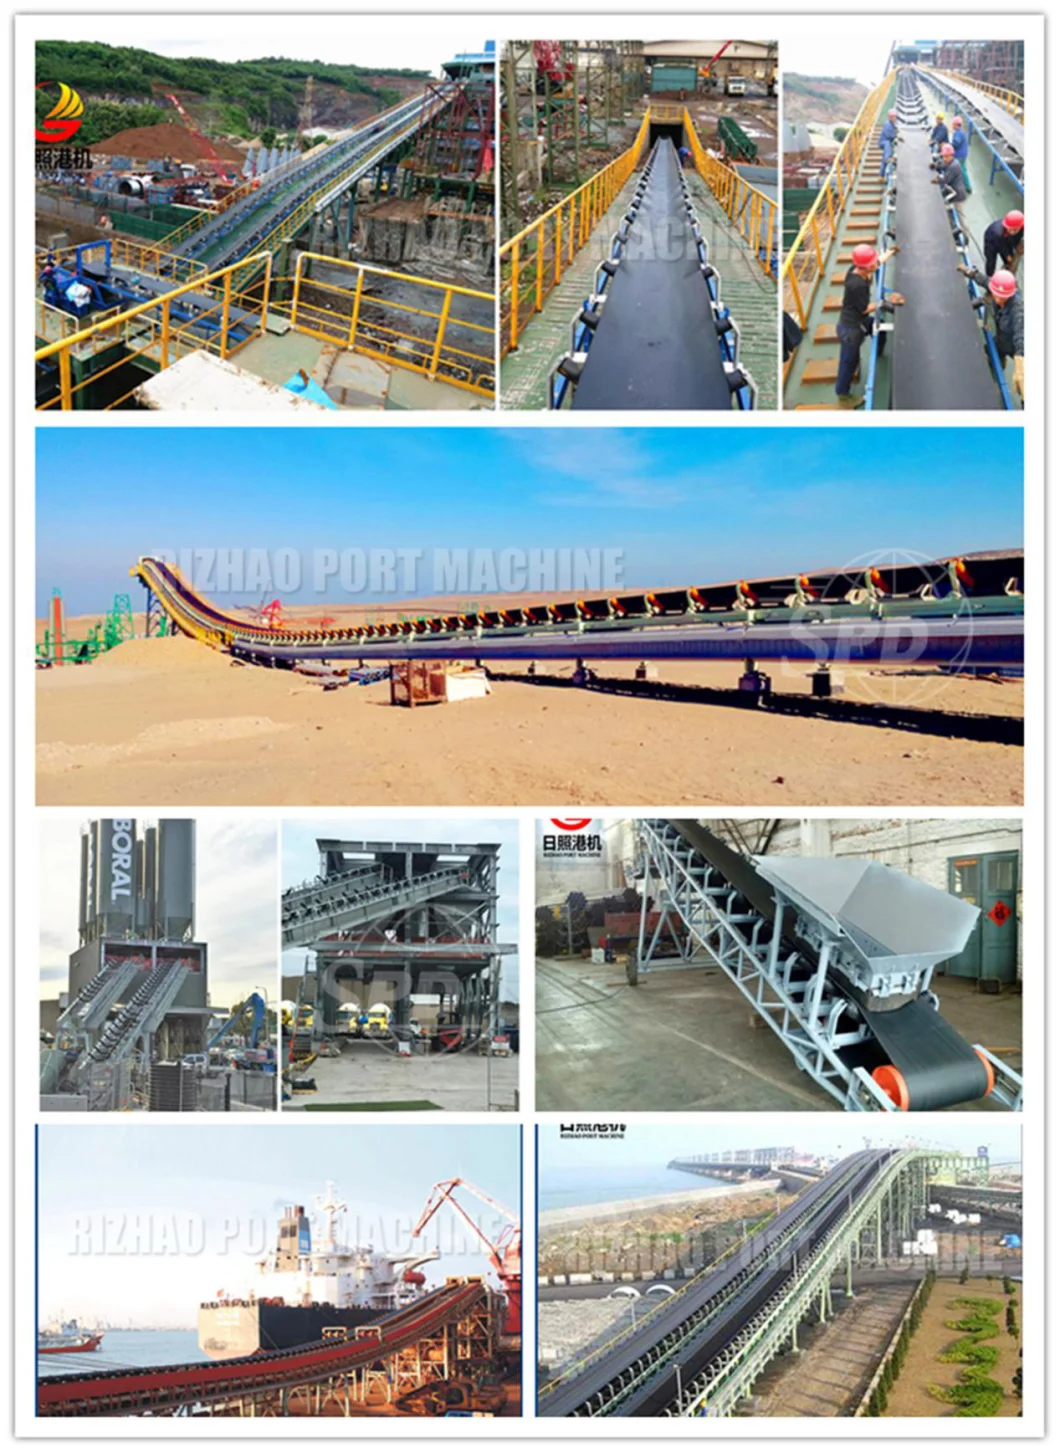 SPD Carry Steel Belt Conveyor Roller for Coal, Mine, Port